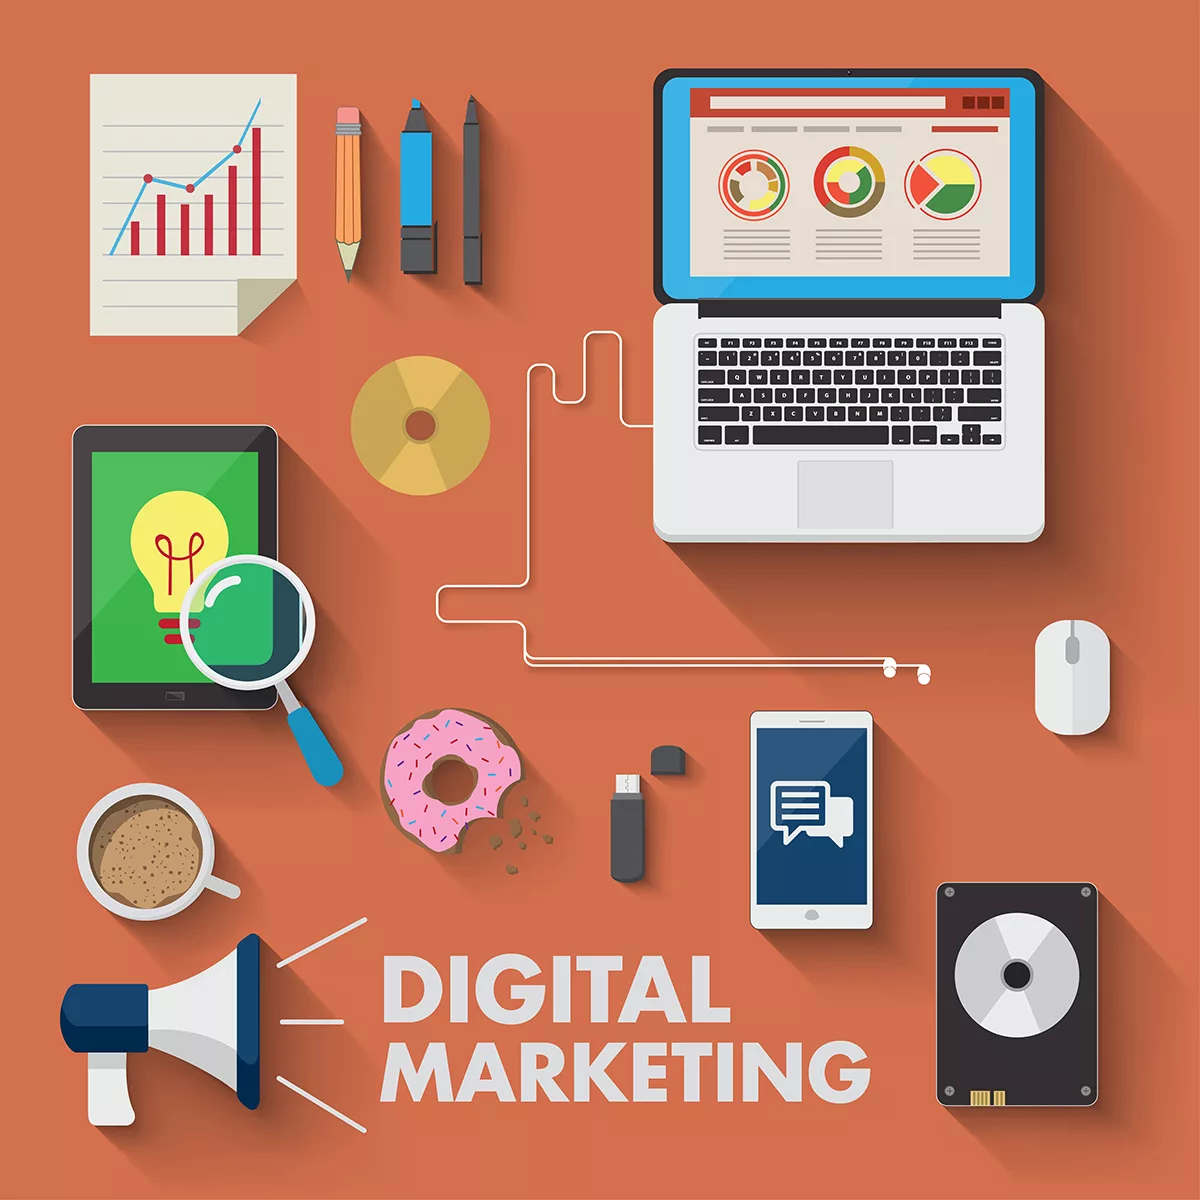 scope of digital marketing